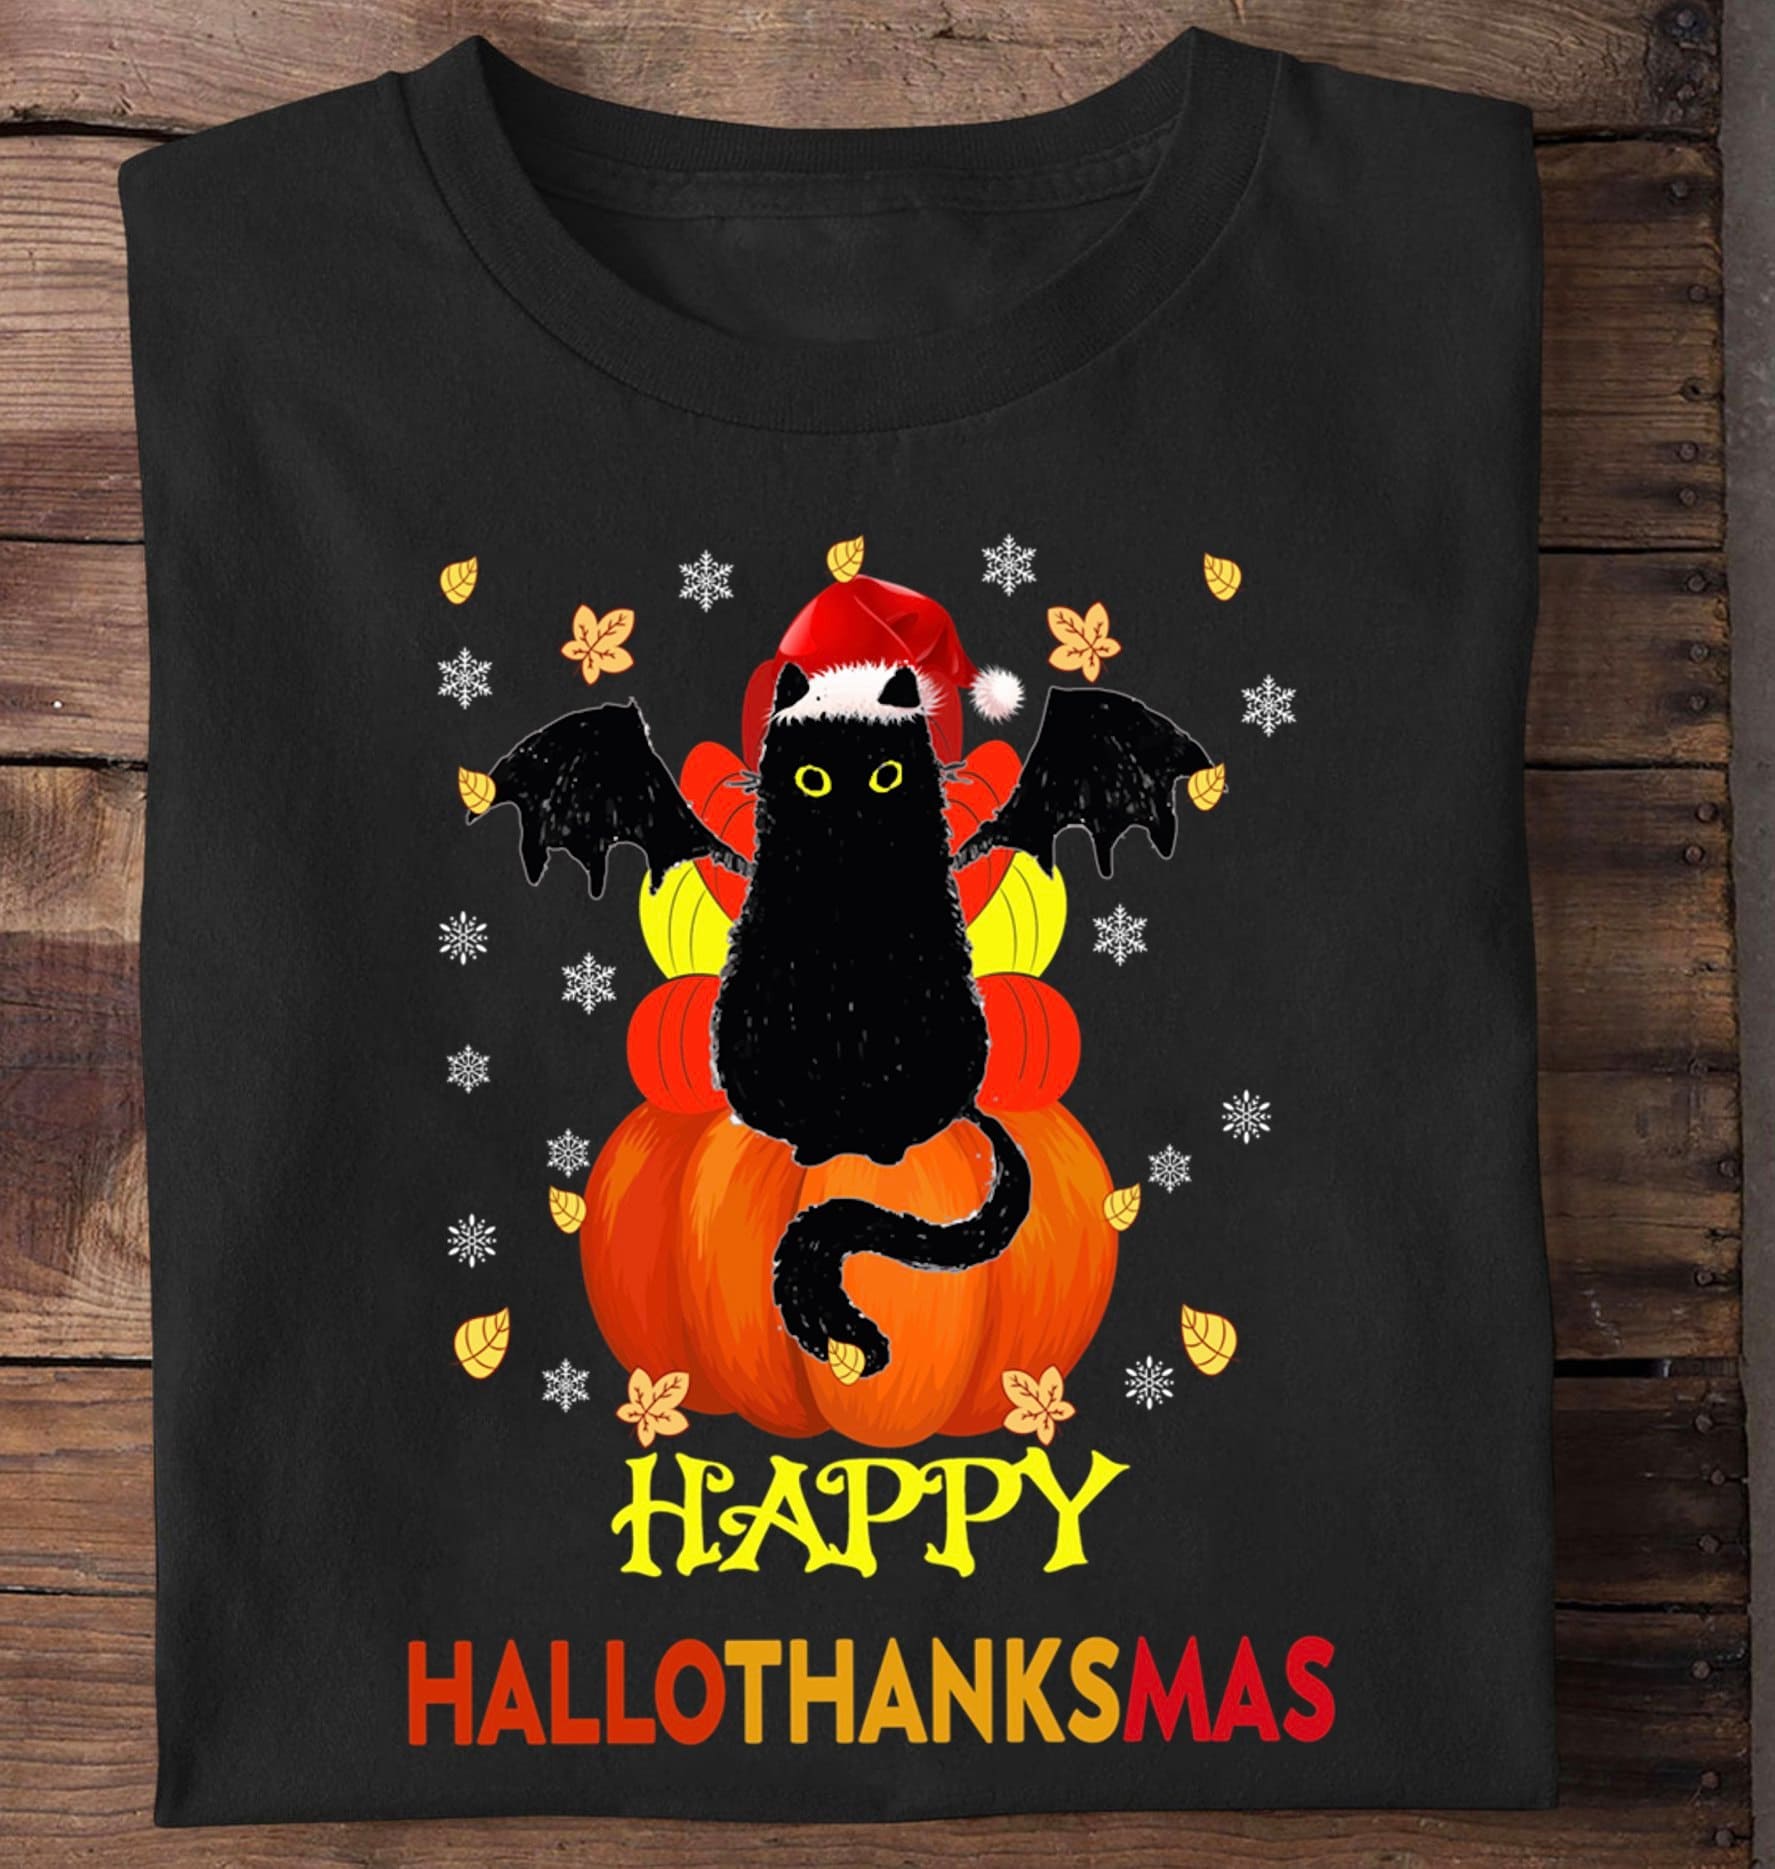 Happy HalloThanksMas - Devil black cat, Halloween pumpkin, gift for the holidays